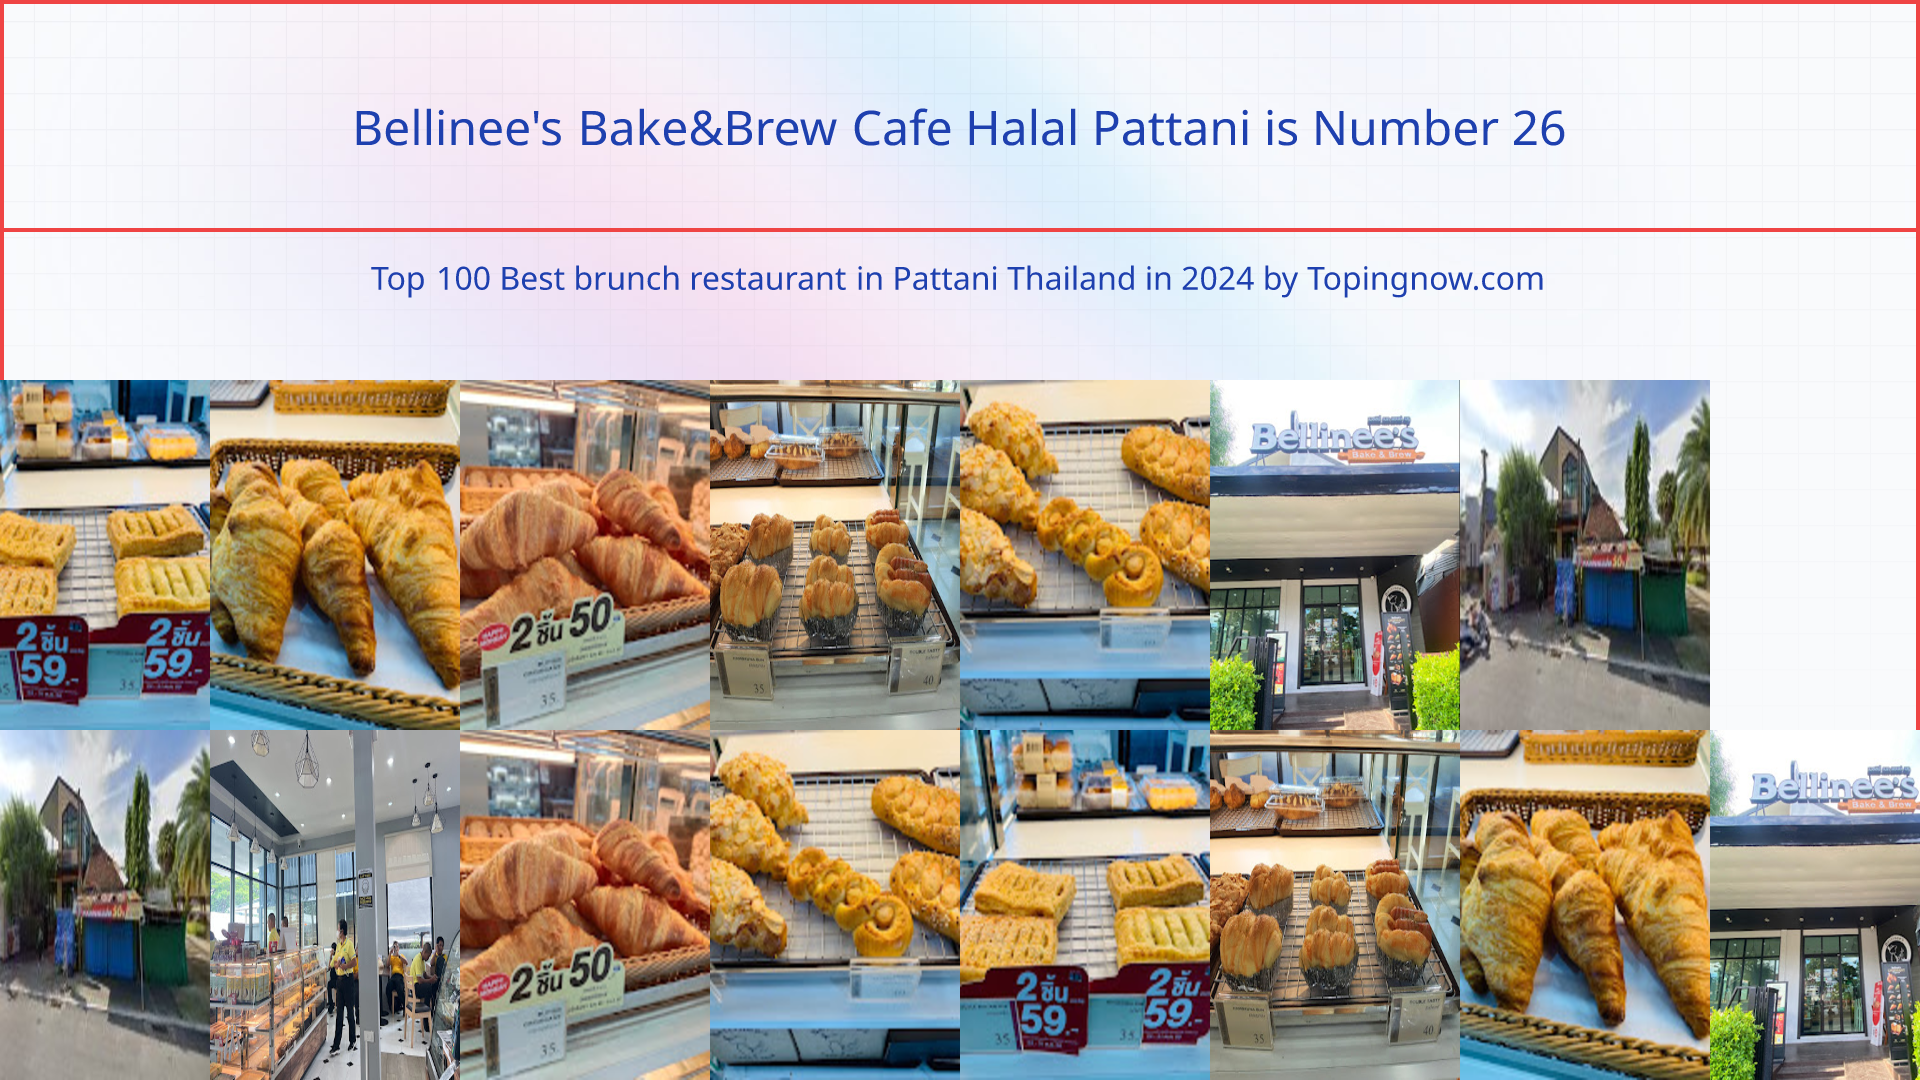 Bellinee's Bake&Brew Cafe Halal Pattani: Top 100 Best brunch restaurant in Pattani Thailand in 2024